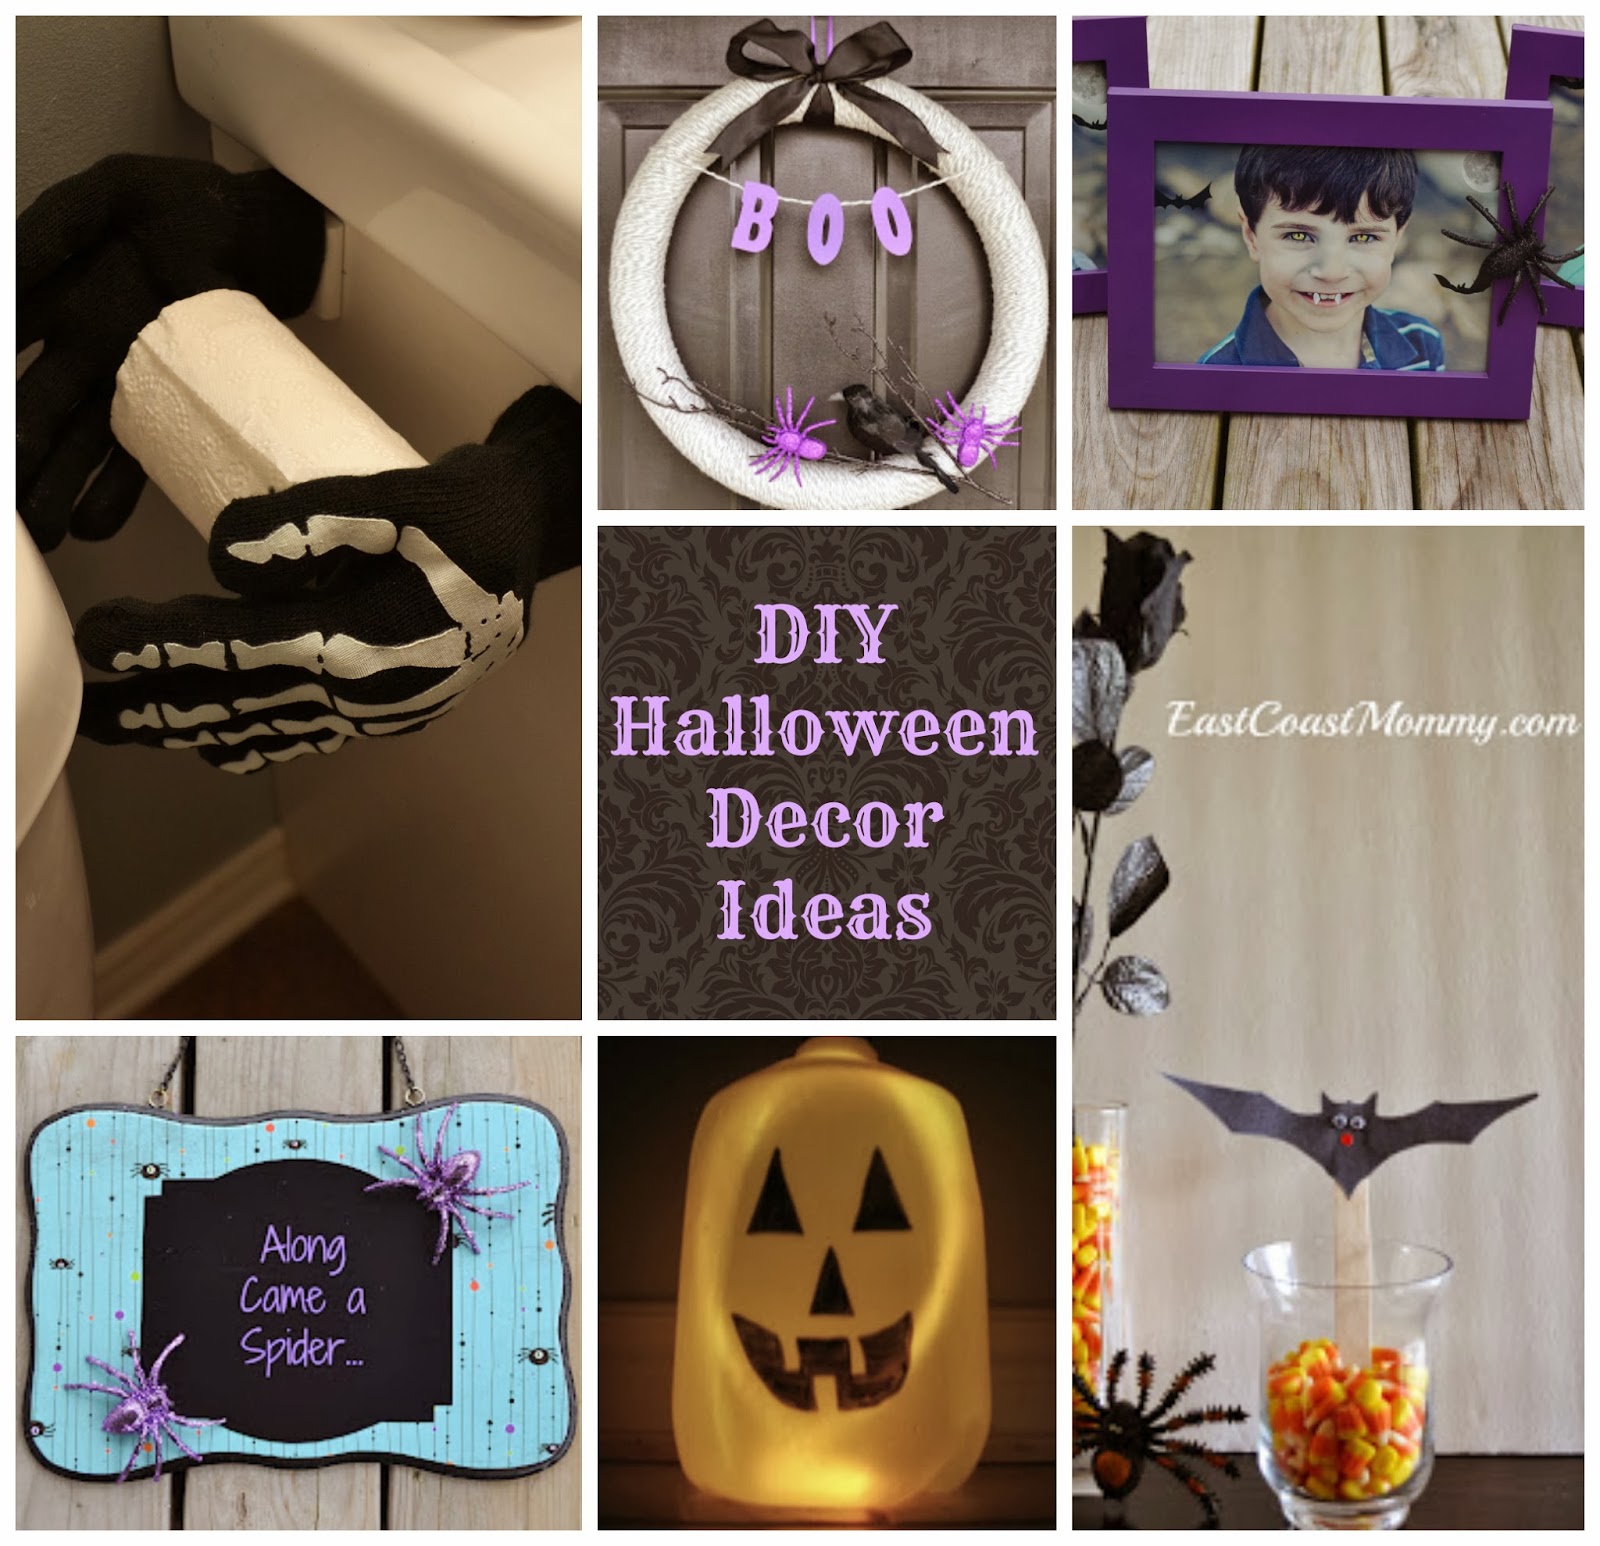 East Coast Mommy: 7 Fantastic DIY Halloween Decor Ideas